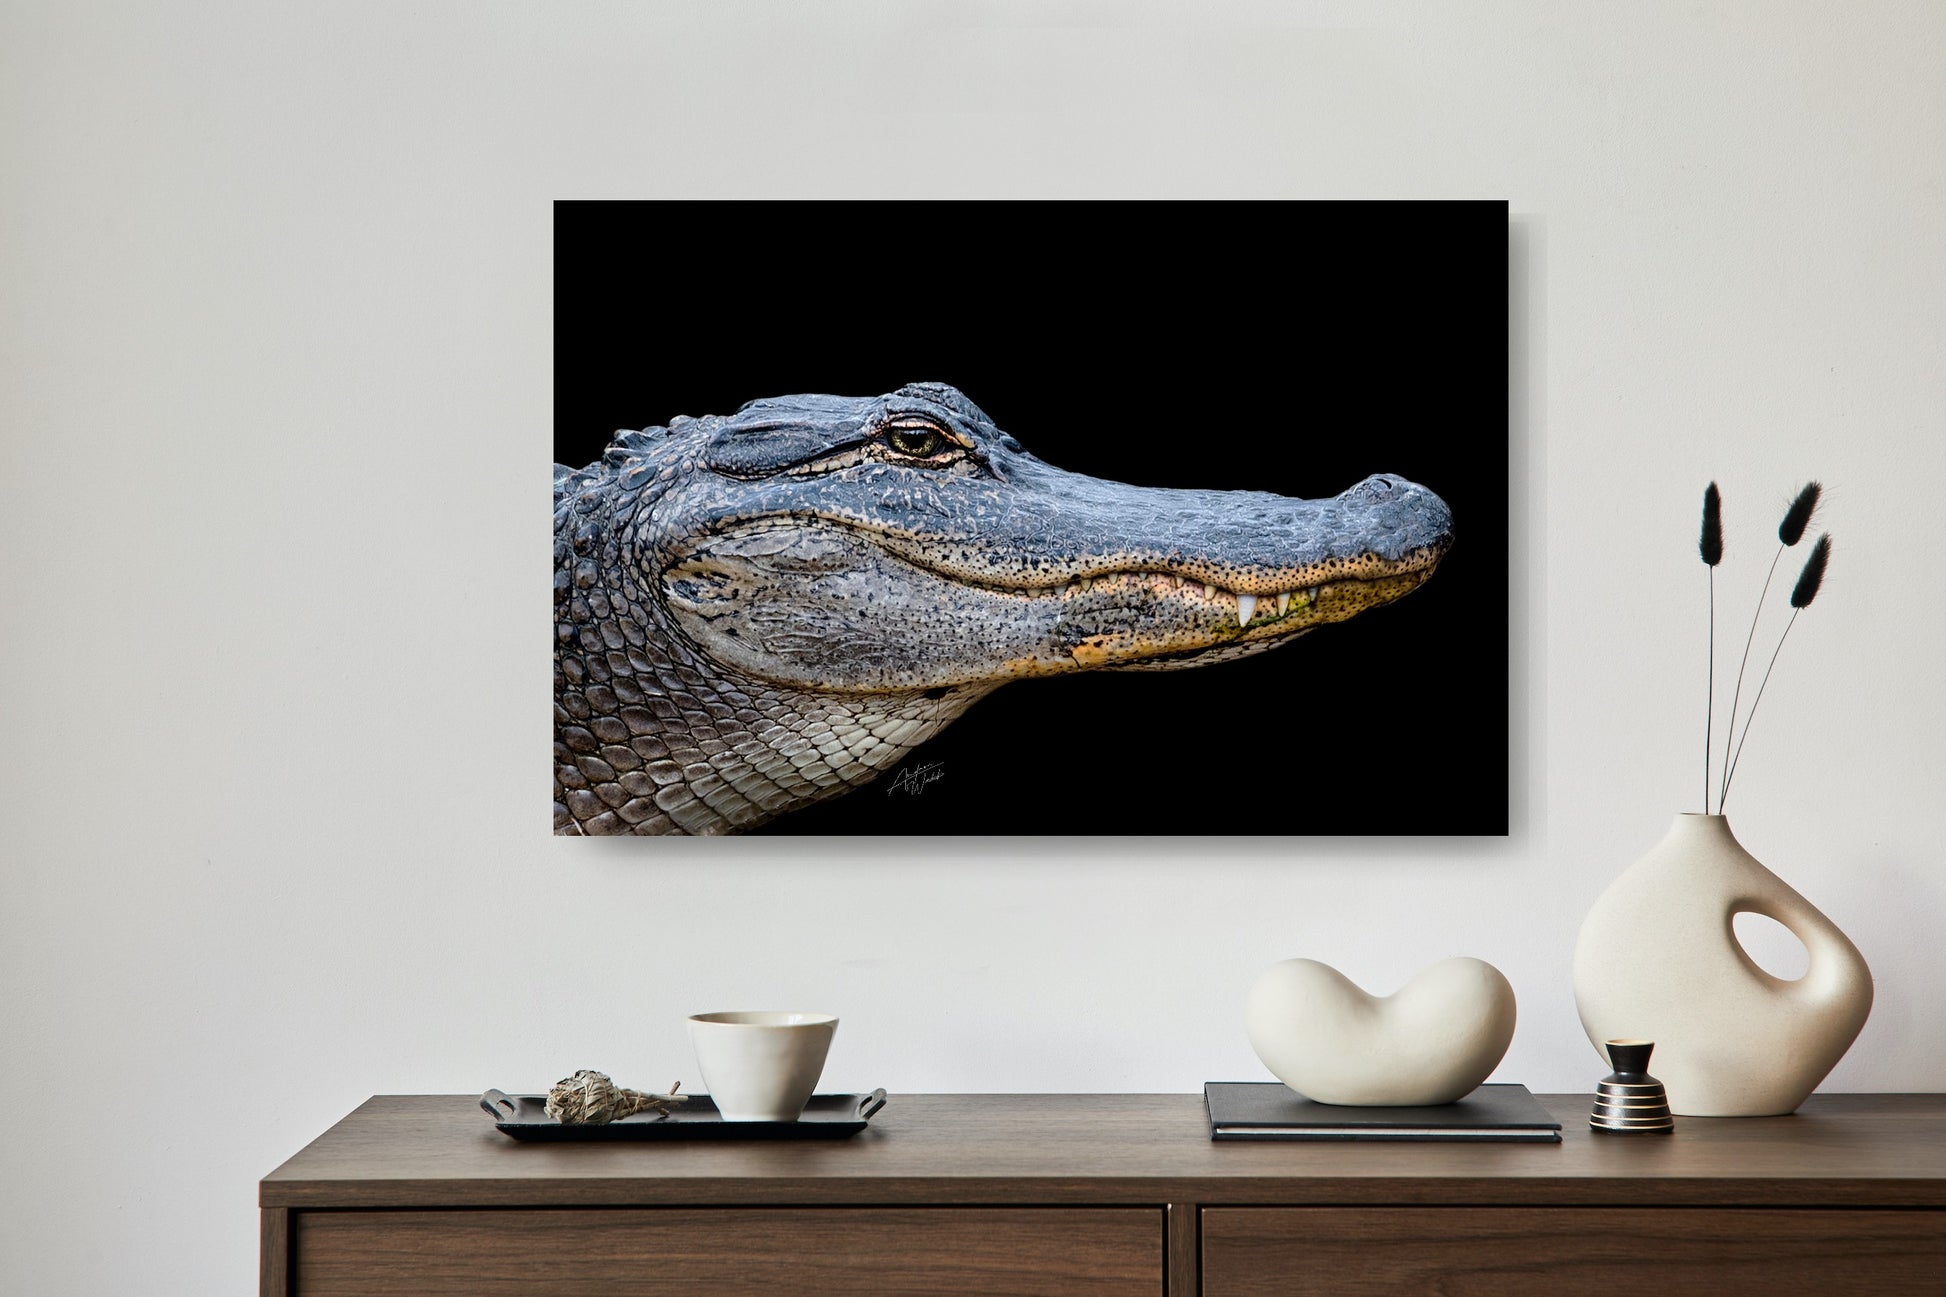 American Alligator Art, American Alligator on Black Background Portrait, Minimalist Alligator Wall Art, Alligator Artwork. Alligator gifts. Animal Photography. Lowcountry art. Lowcountry decor. Alligator decor.